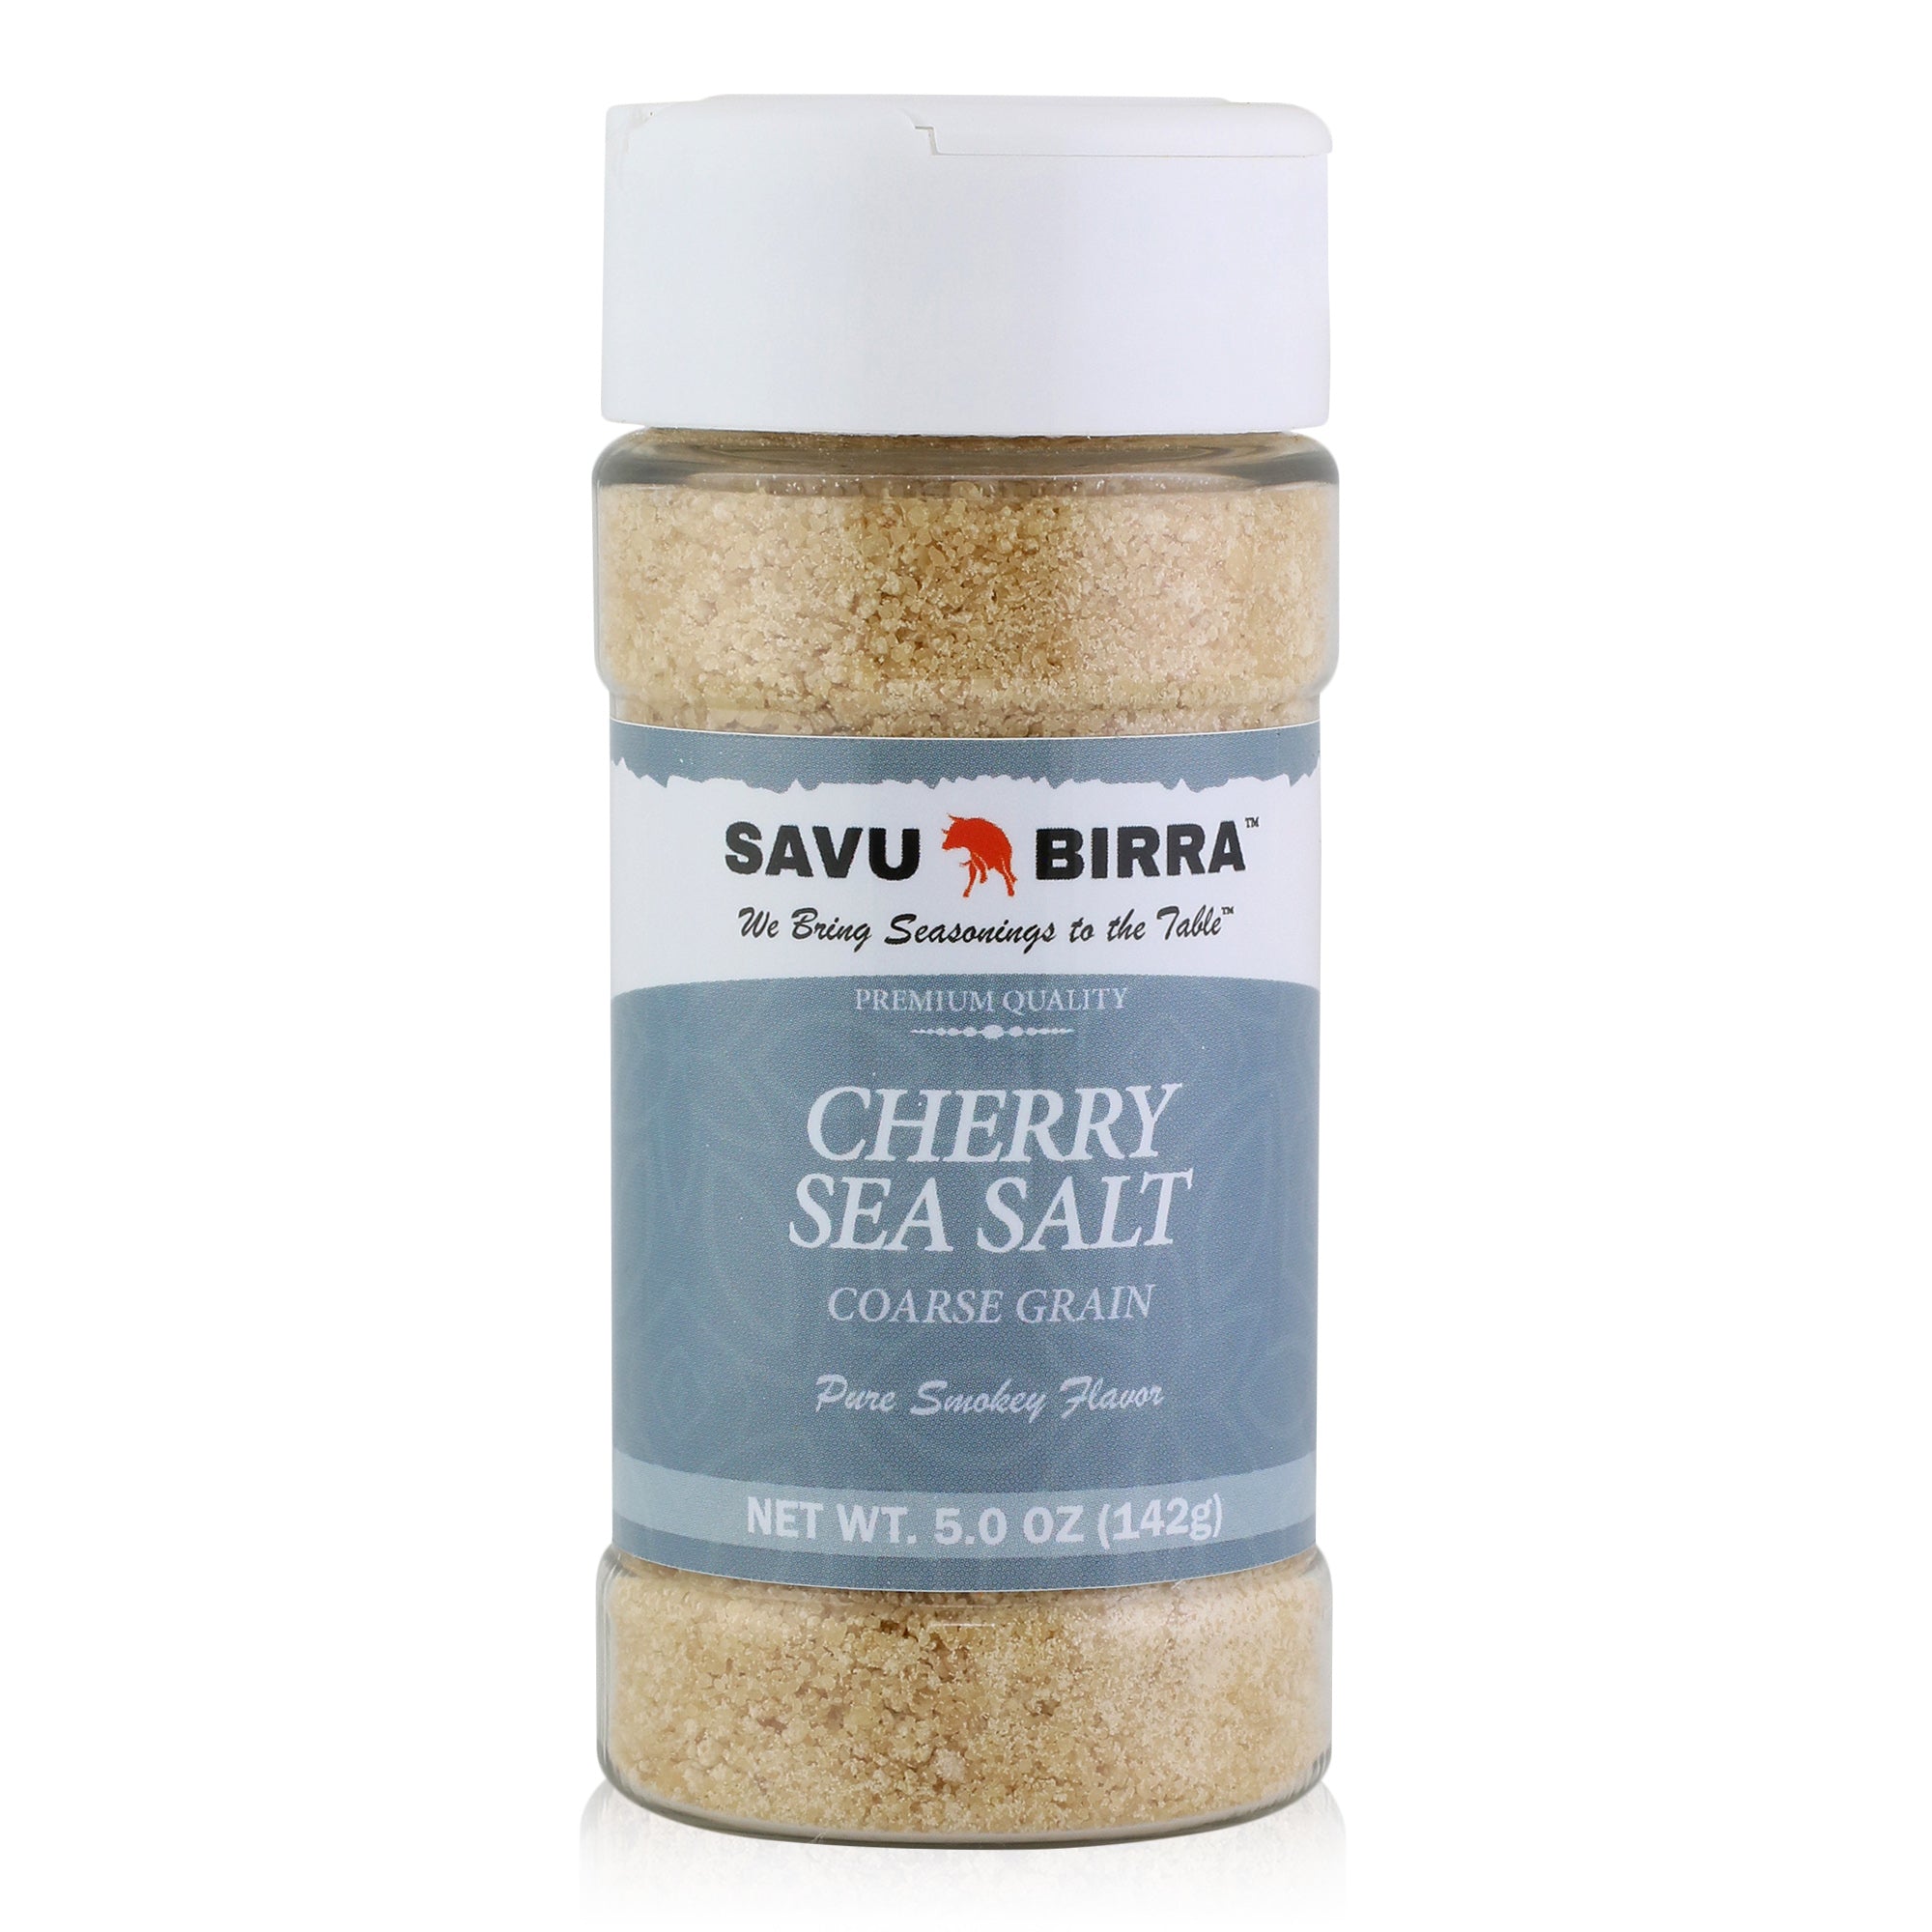 Cherrywood Smoked Sea SaltSavu Birra LLC